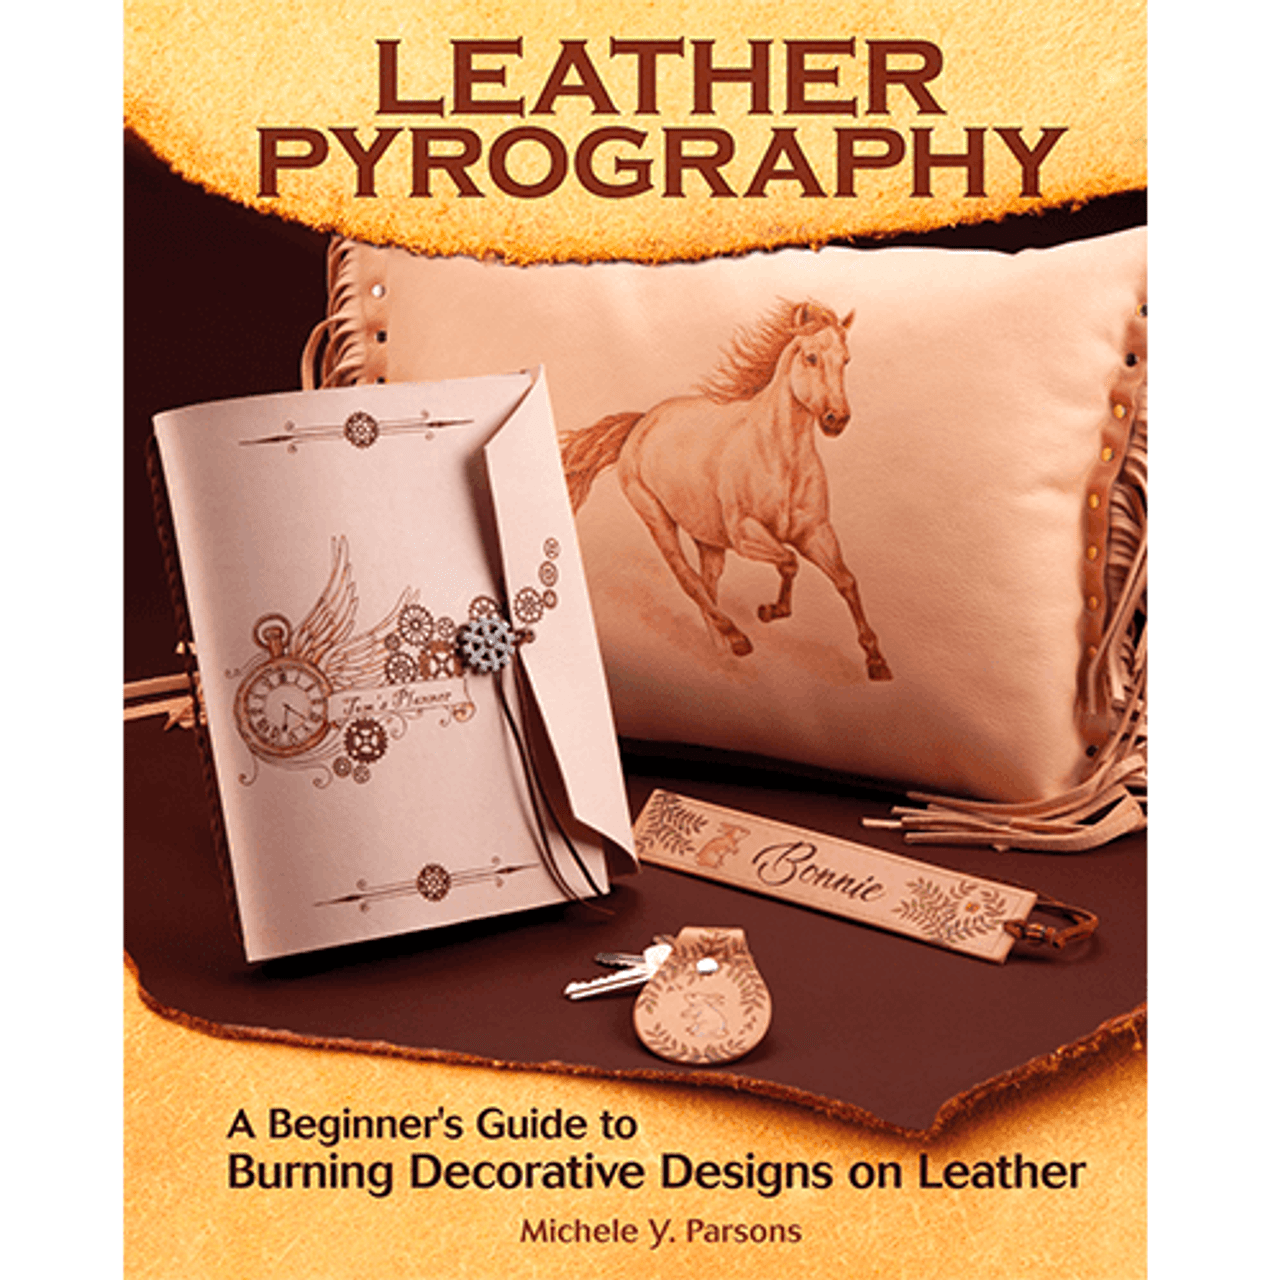 Tooled Leather 24 Varnished Pattern